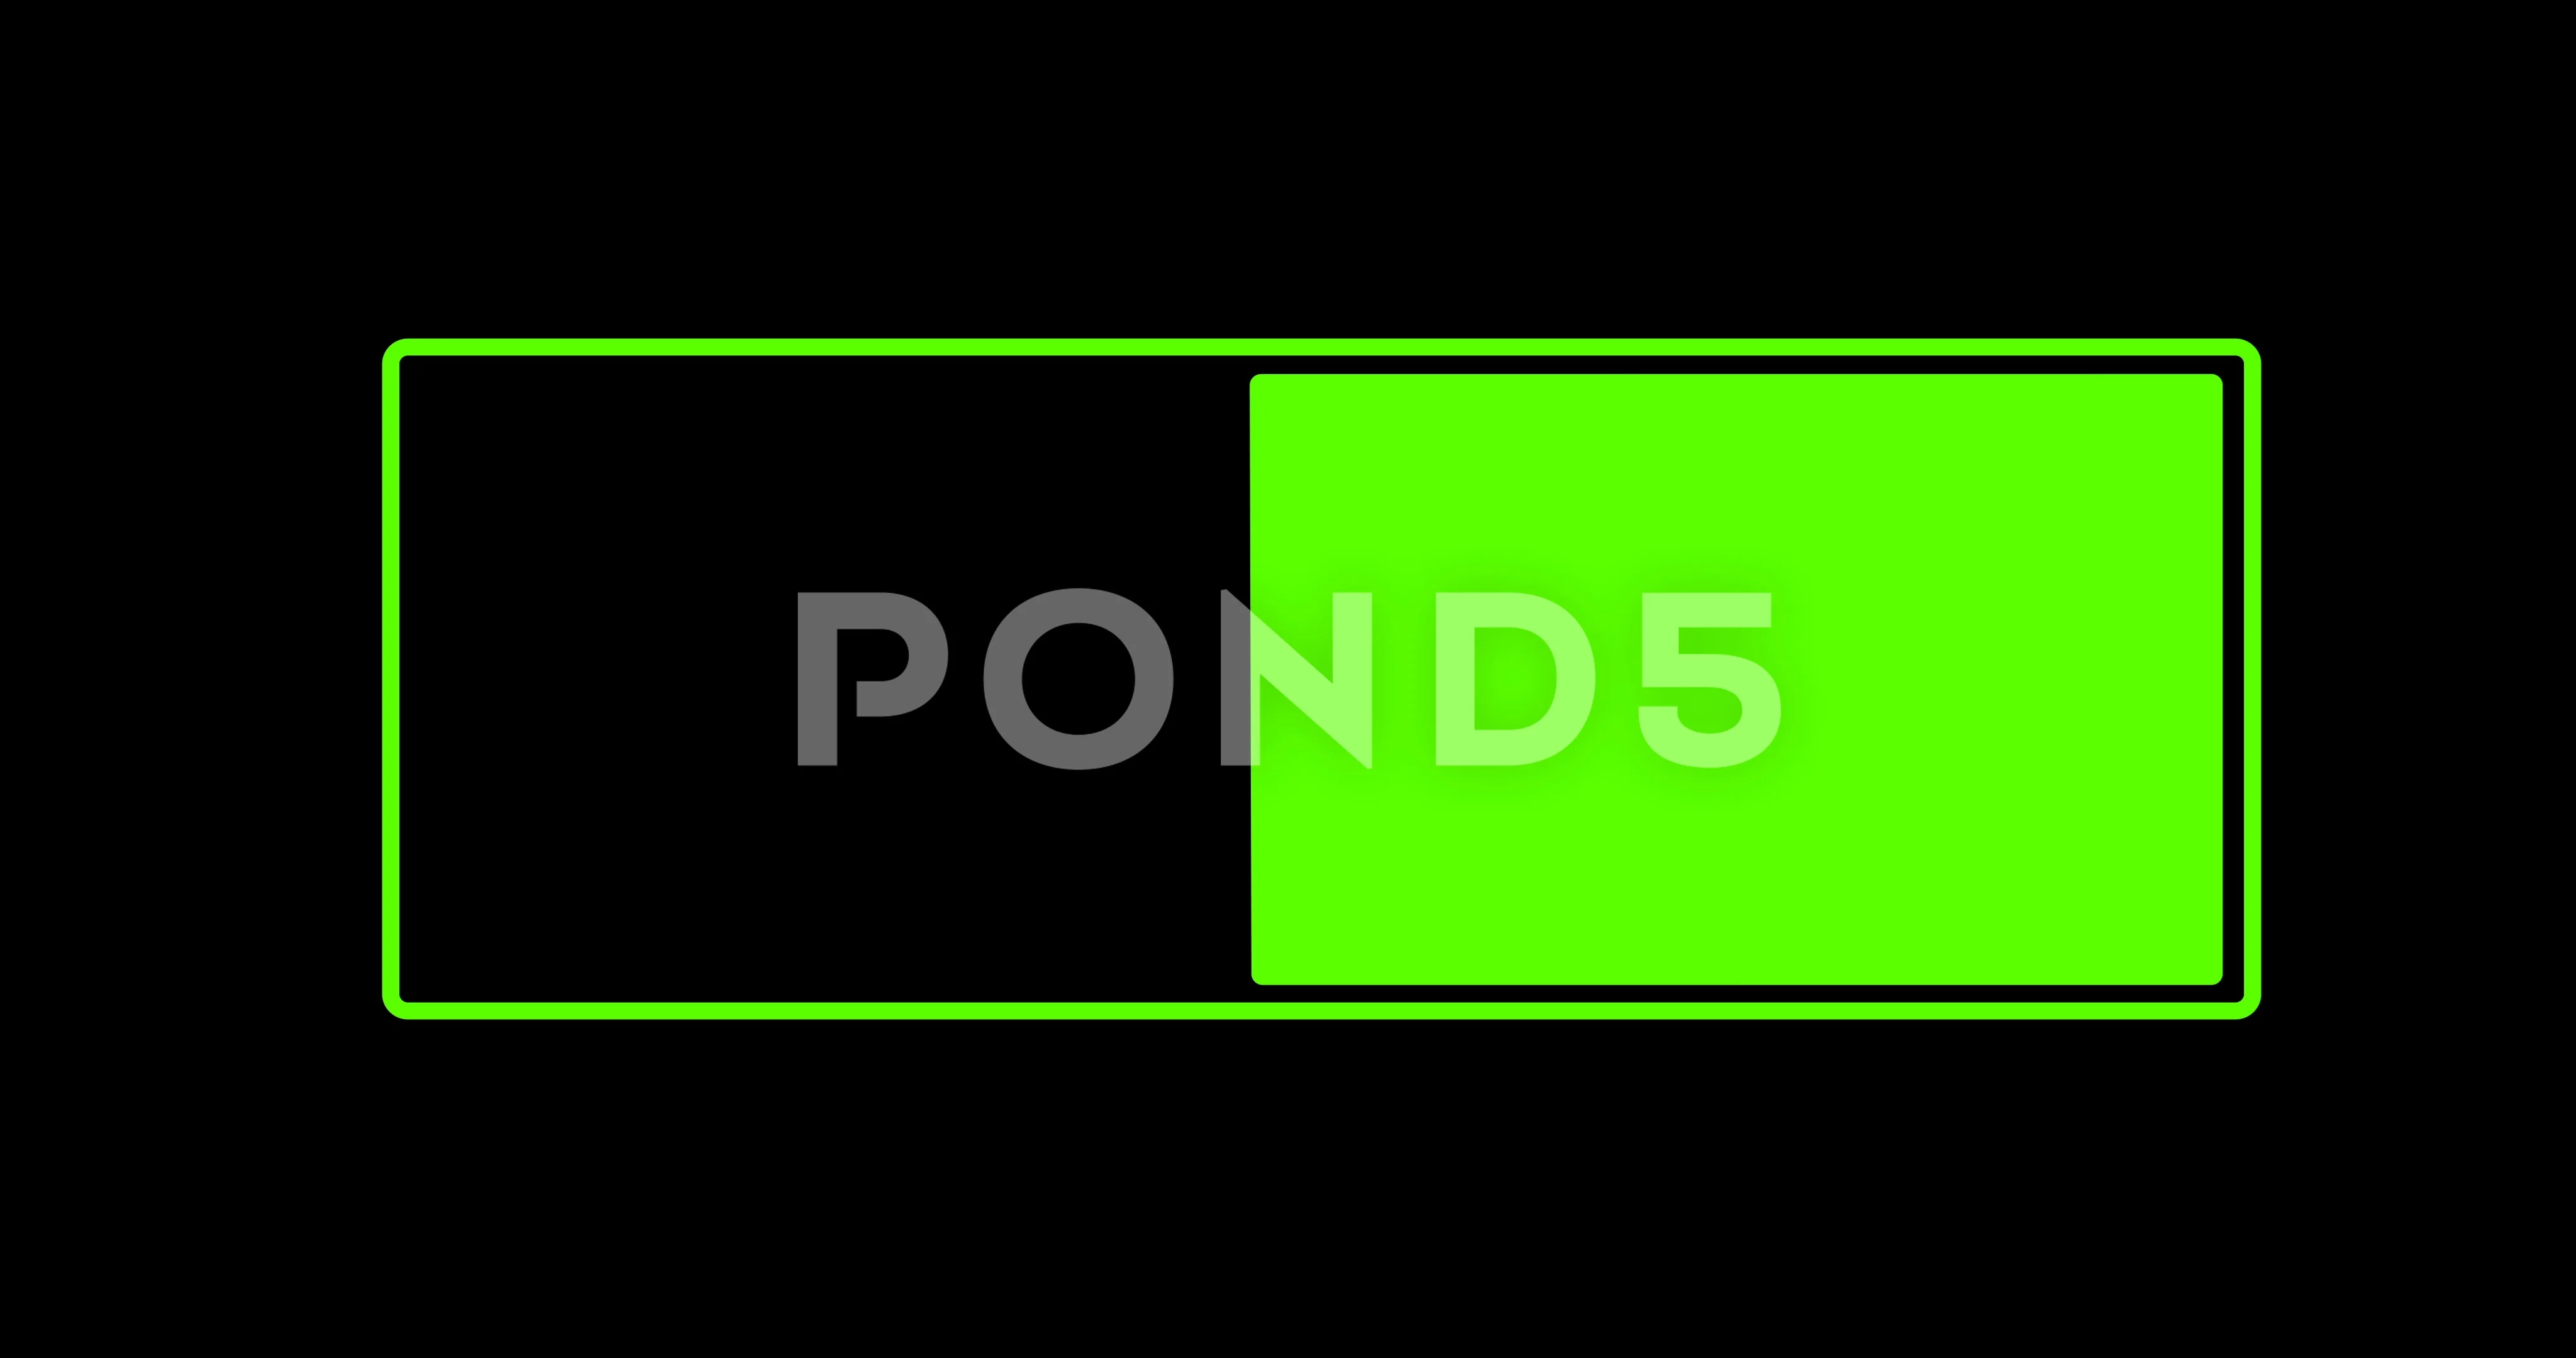 Battery charging animation. Loading prog... | Stock Video | Pond5